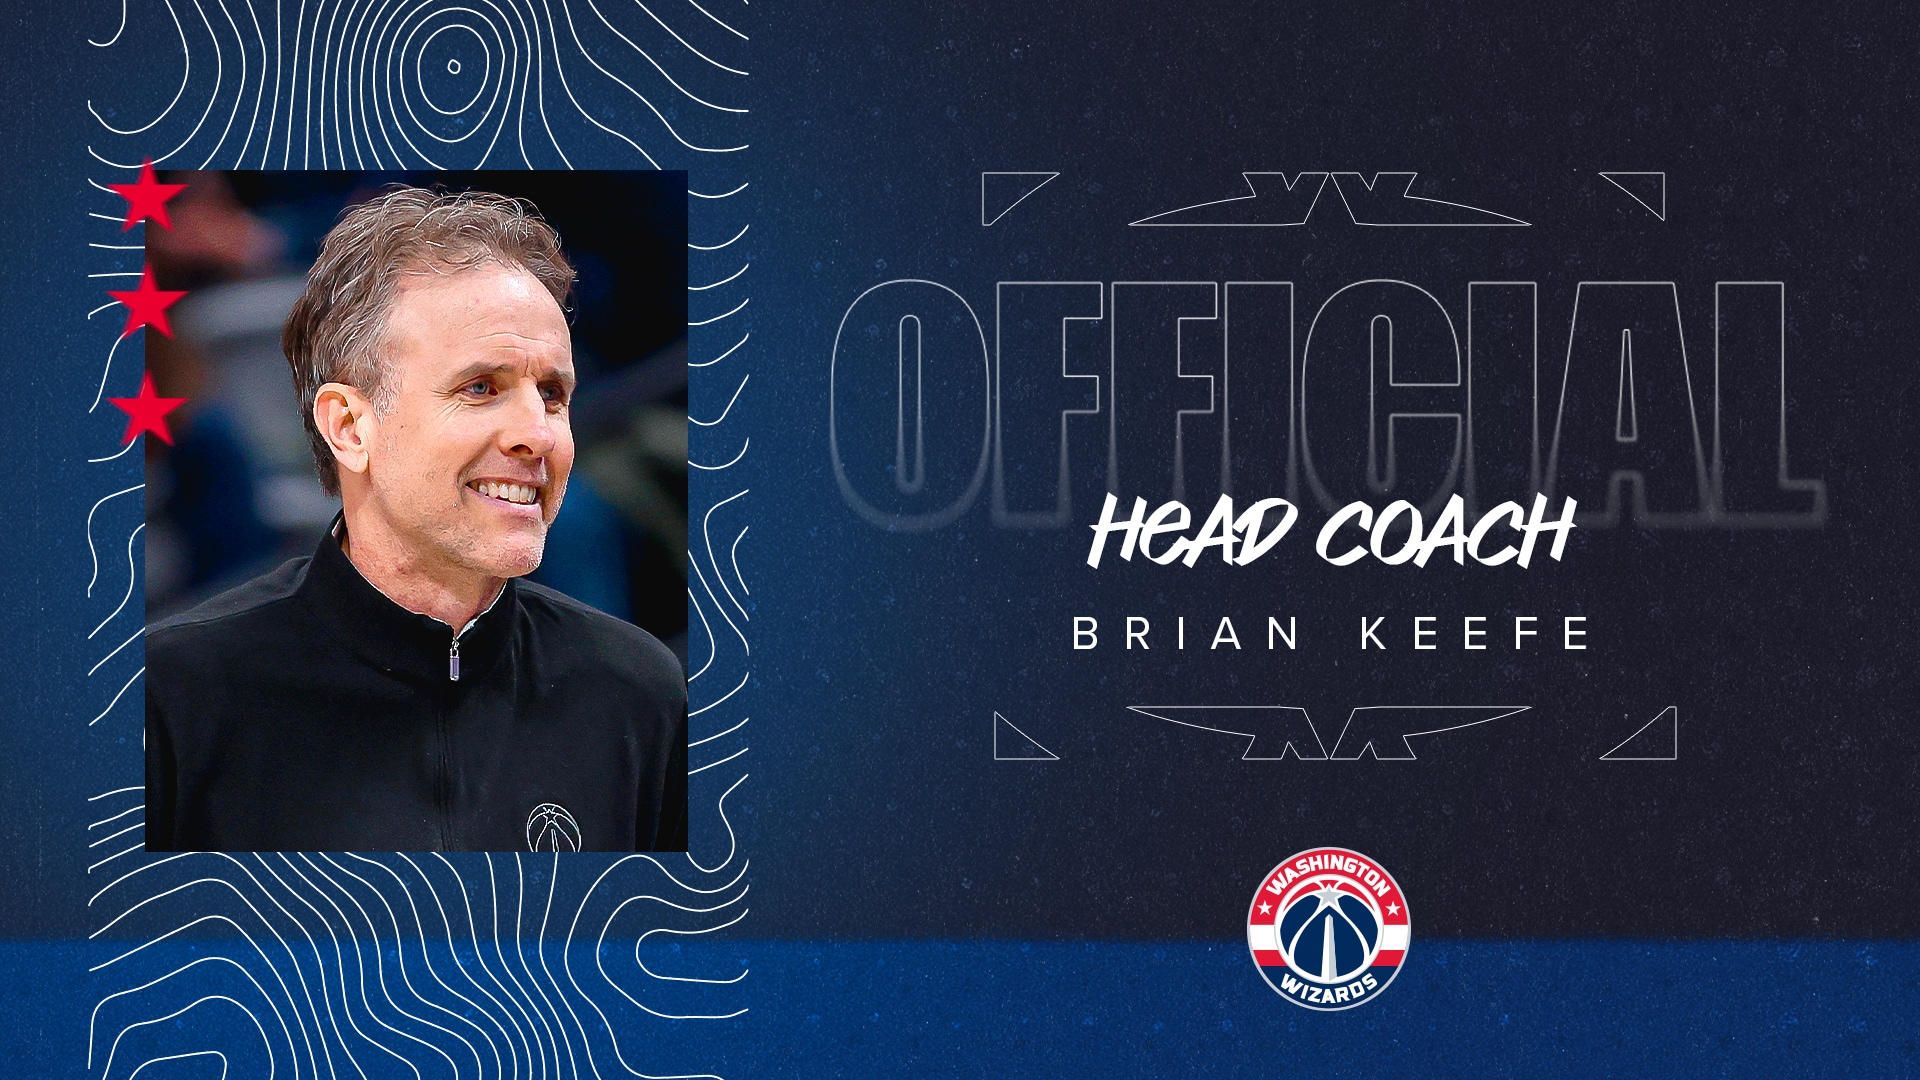 Washington Wizards, Brian Keefe has been named head coach